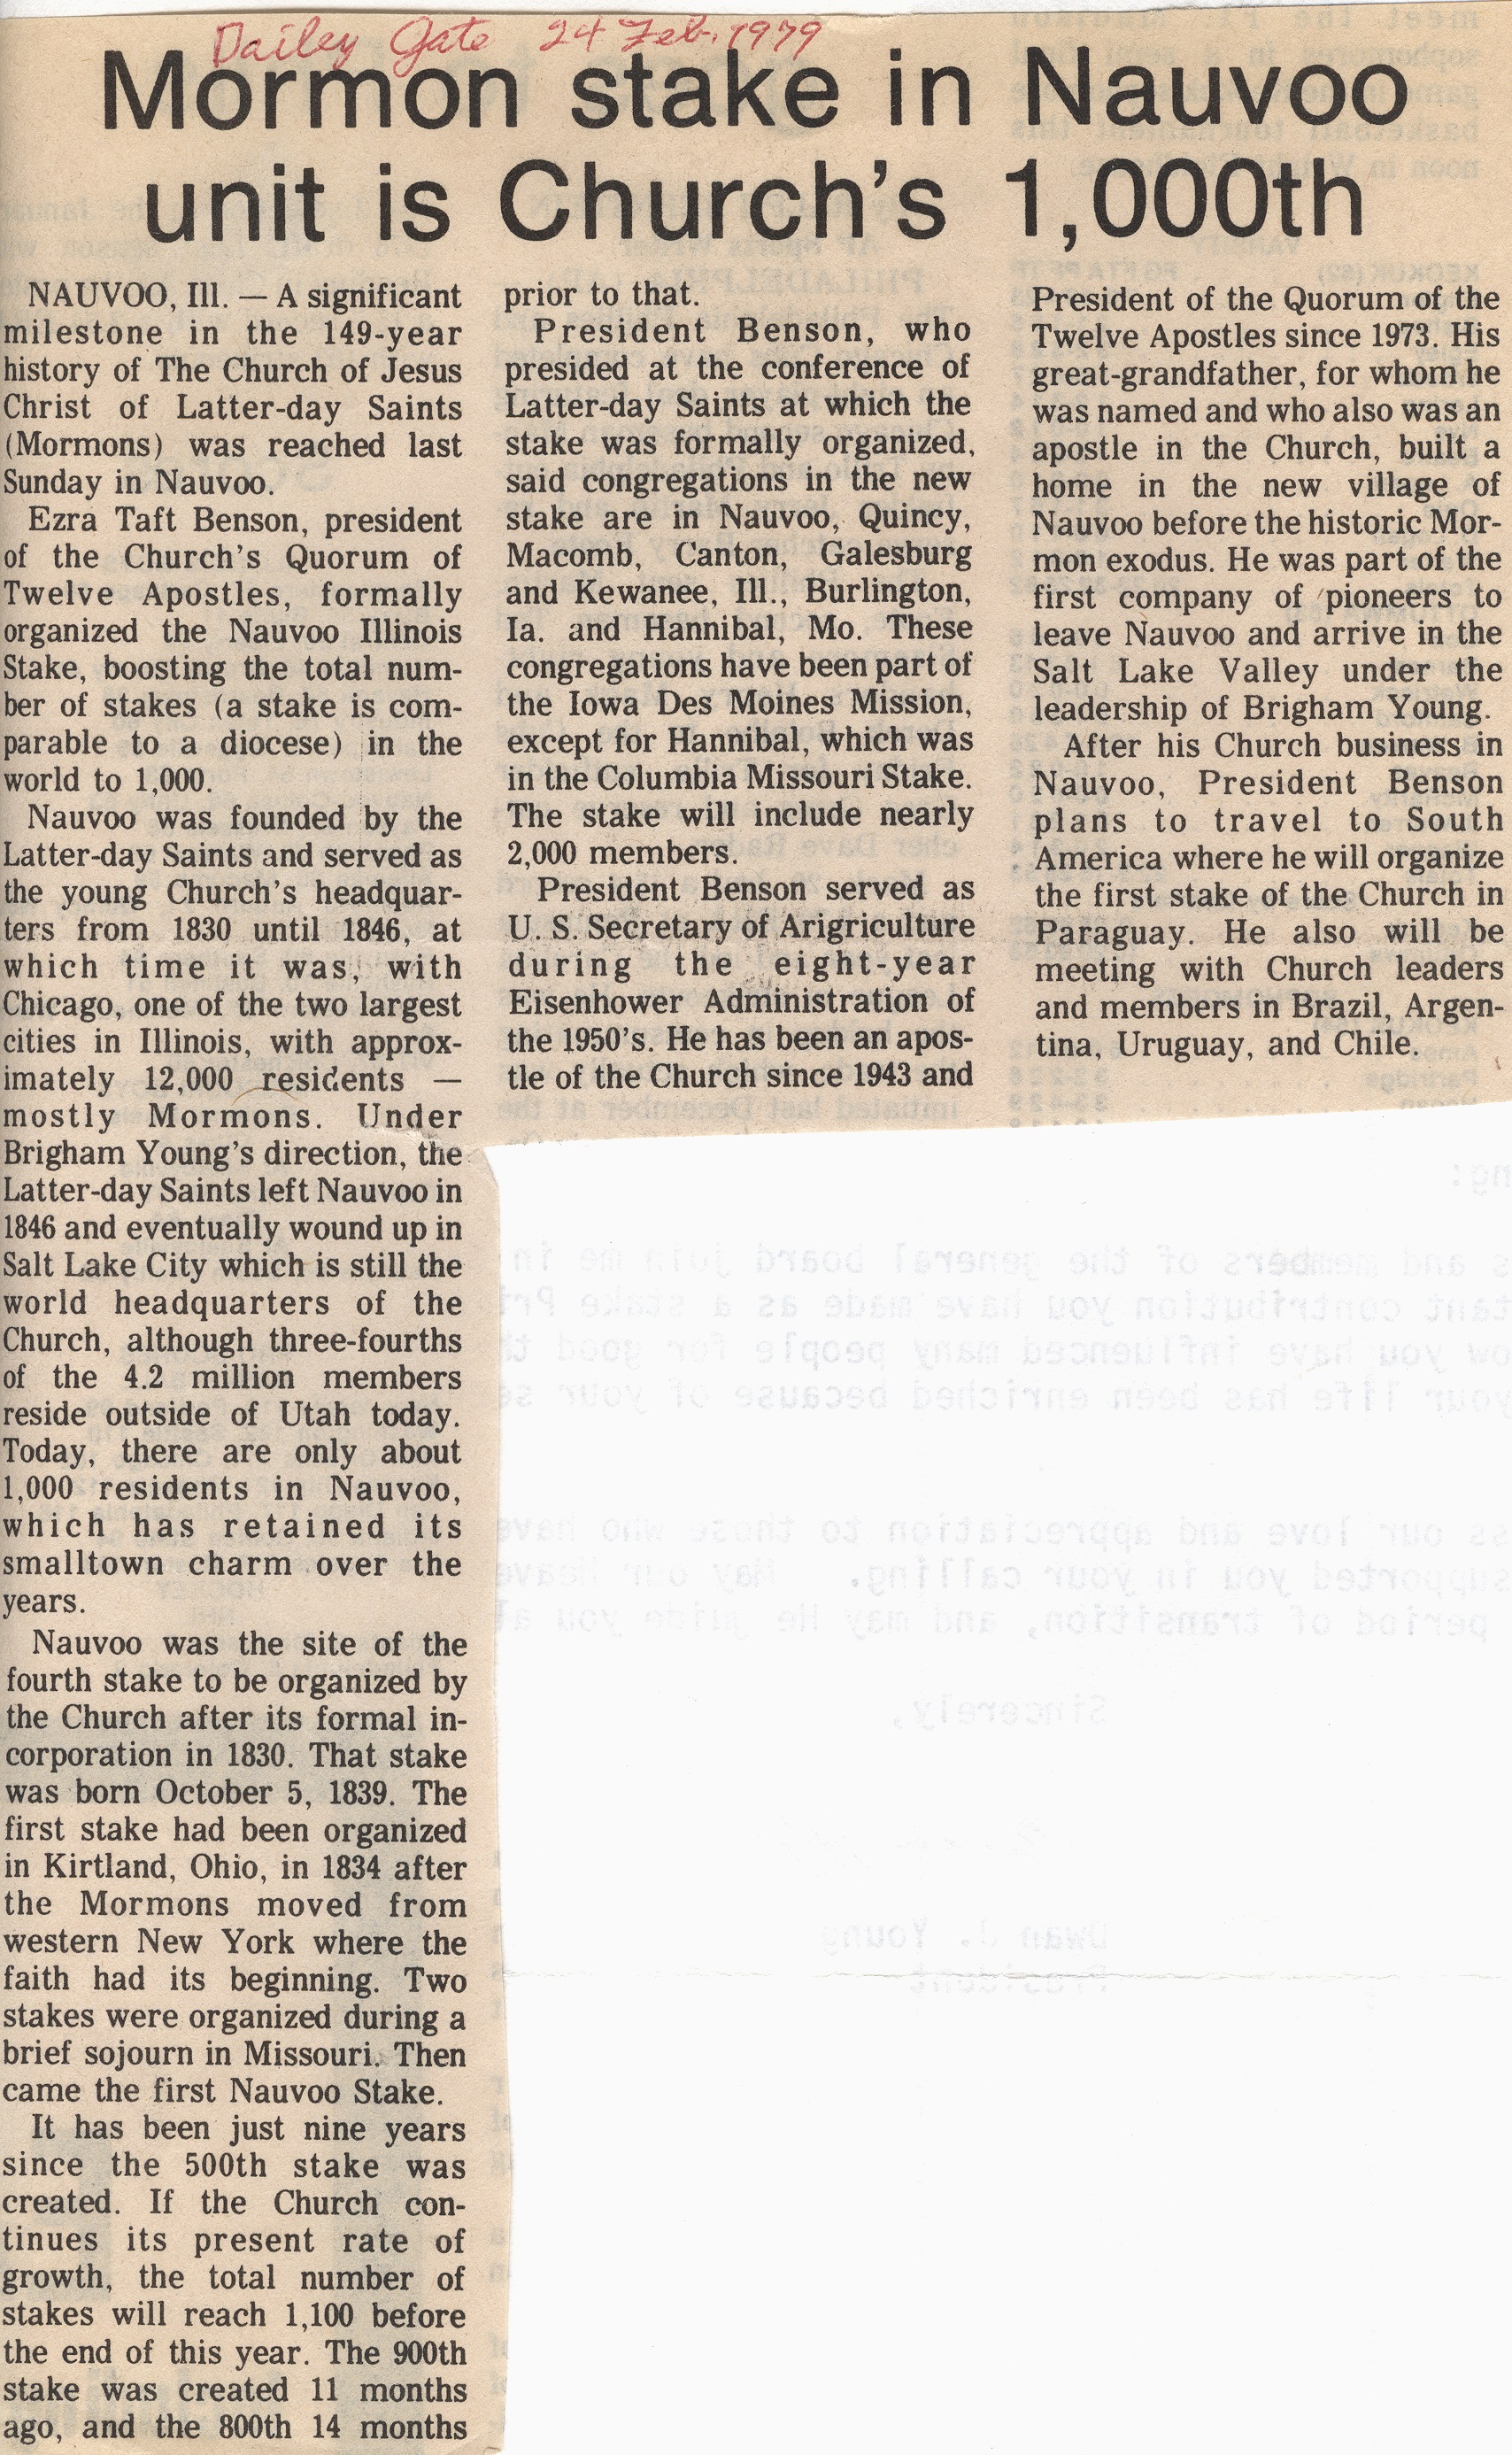 Newspaper Daily Gate City 24 February 1979.jpg